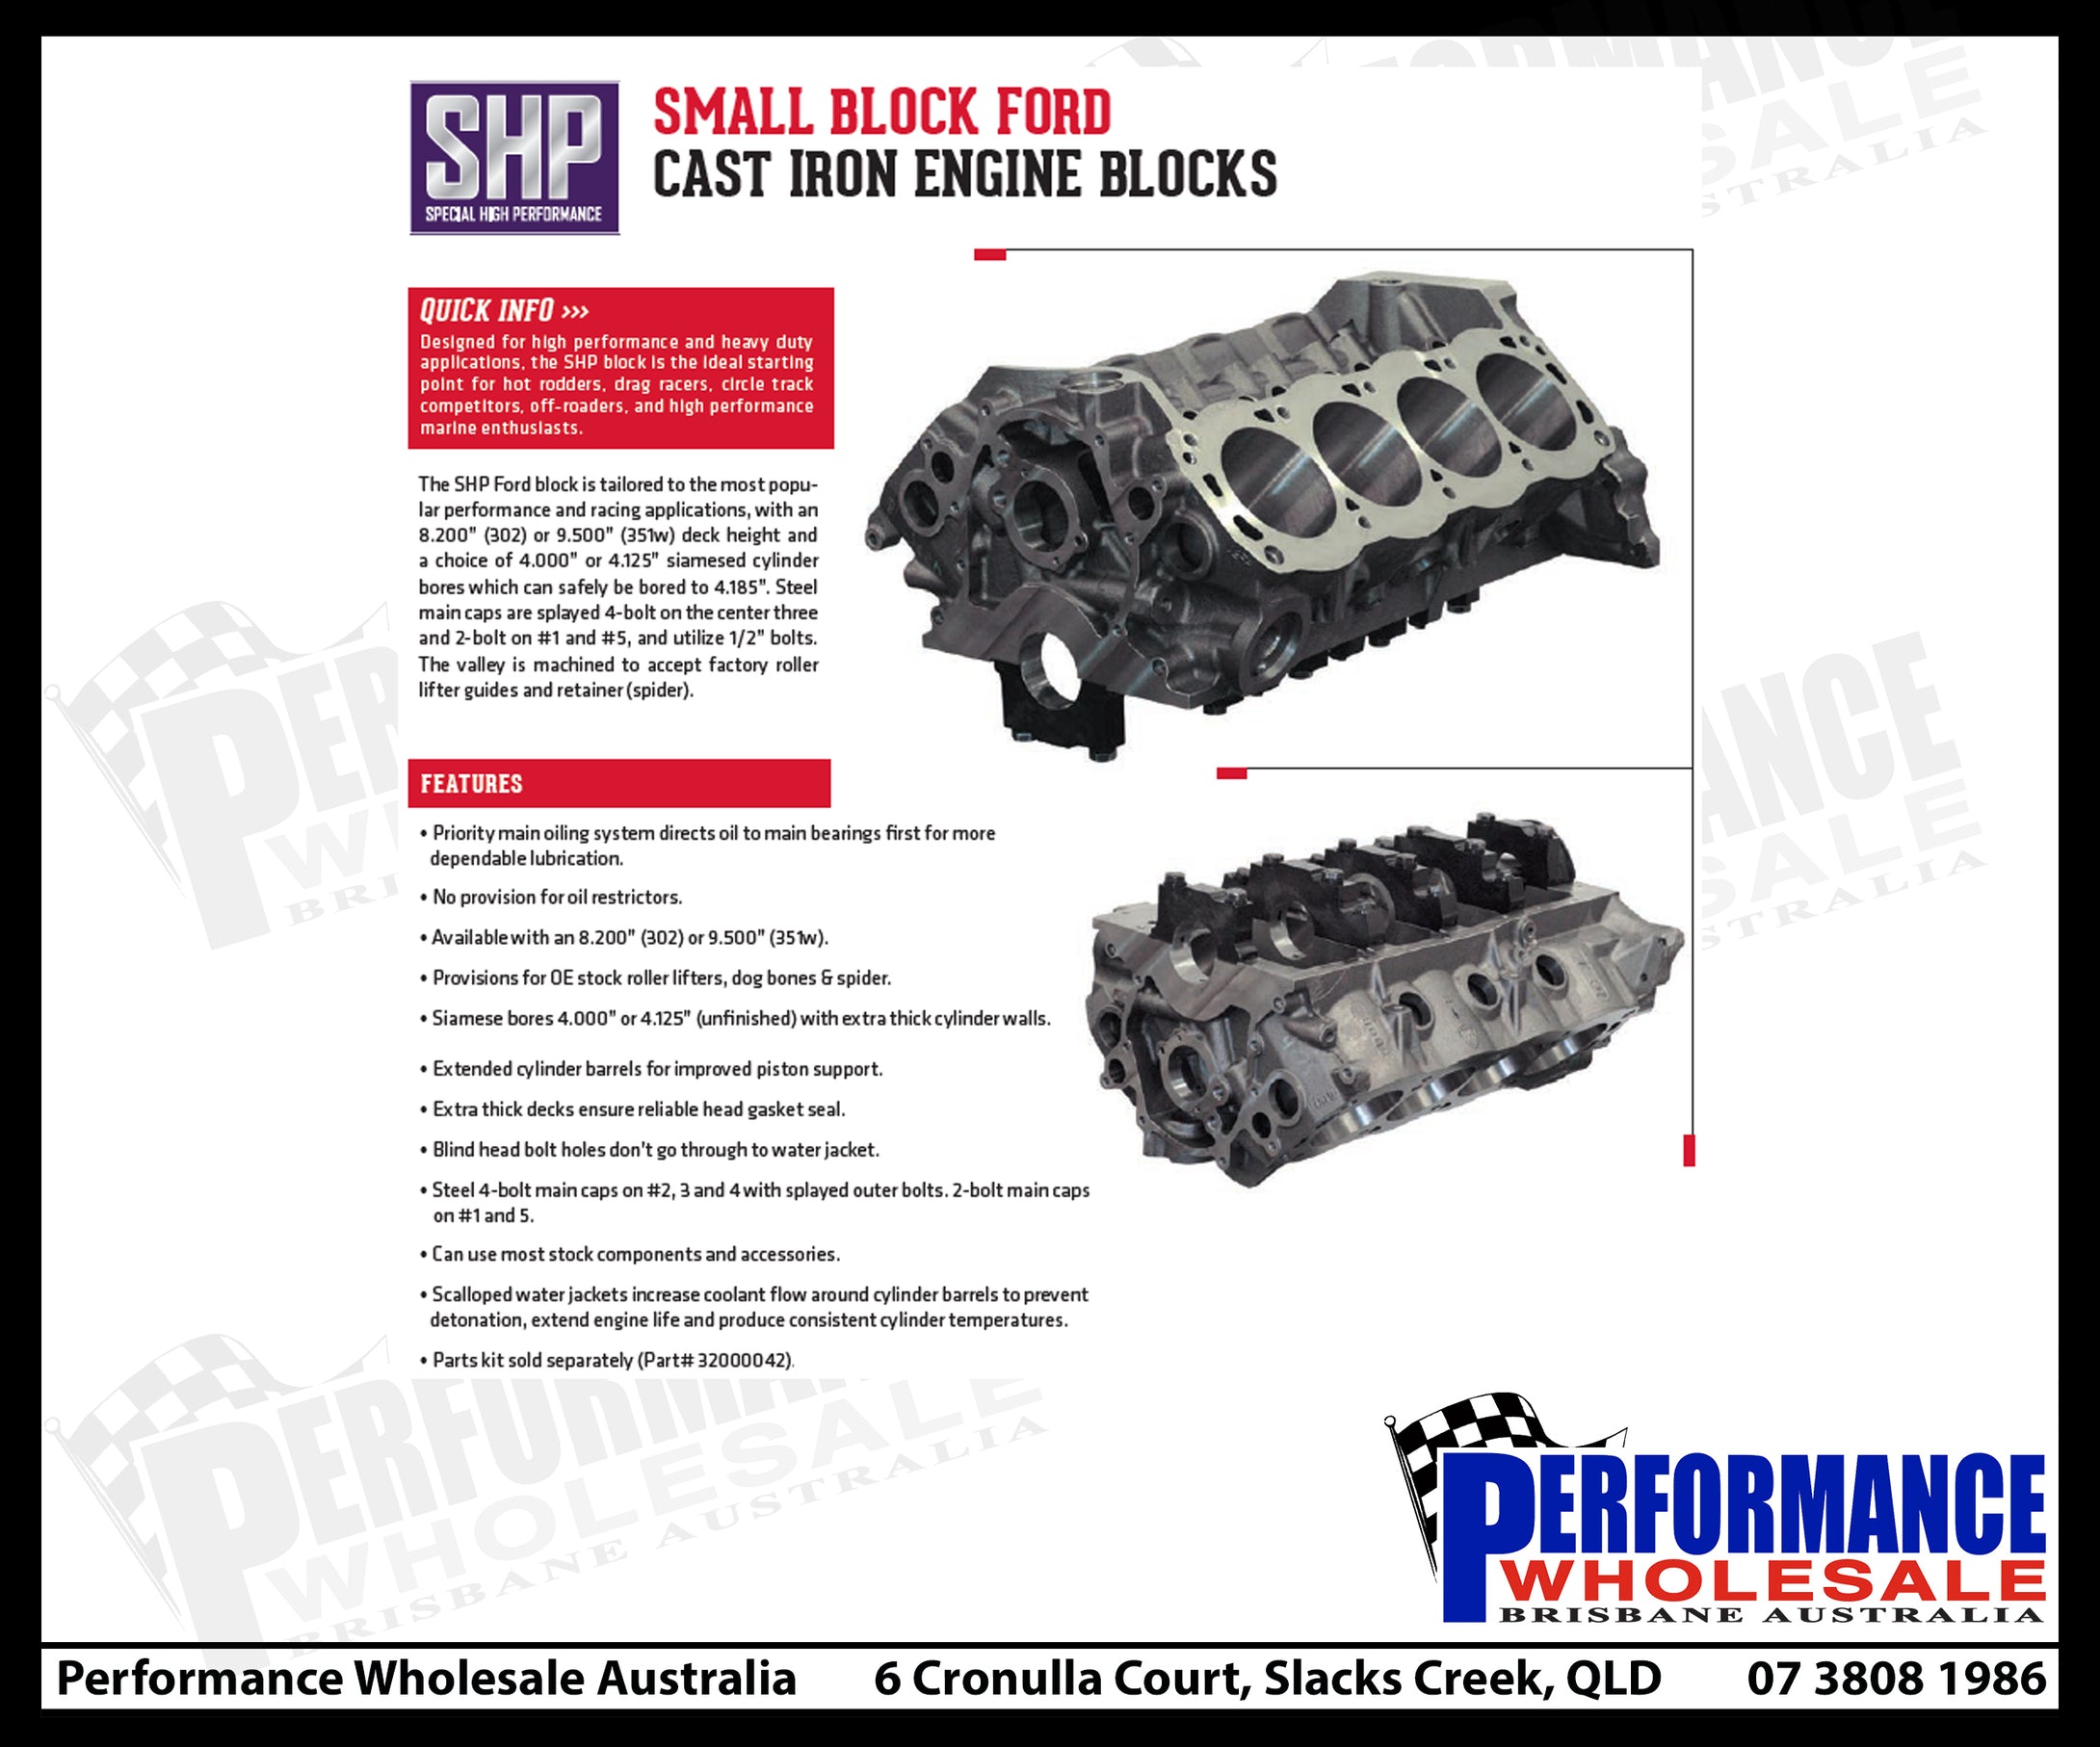 Dart SHP Small Block Ford Iron Block – 4.000-4.125 In. Bore, 8.200-9.500 In. Deck